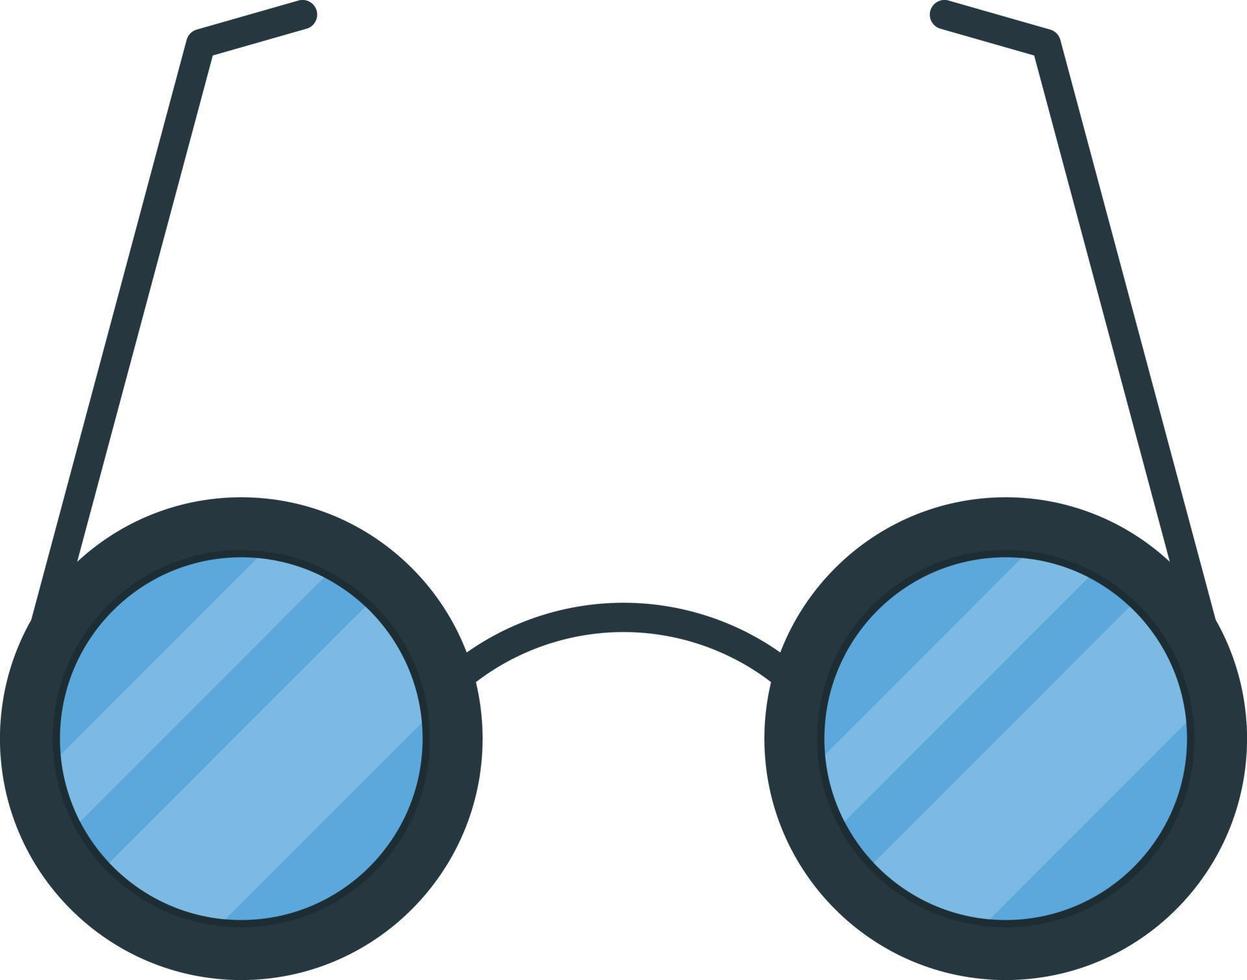 bril platte pictogram vector